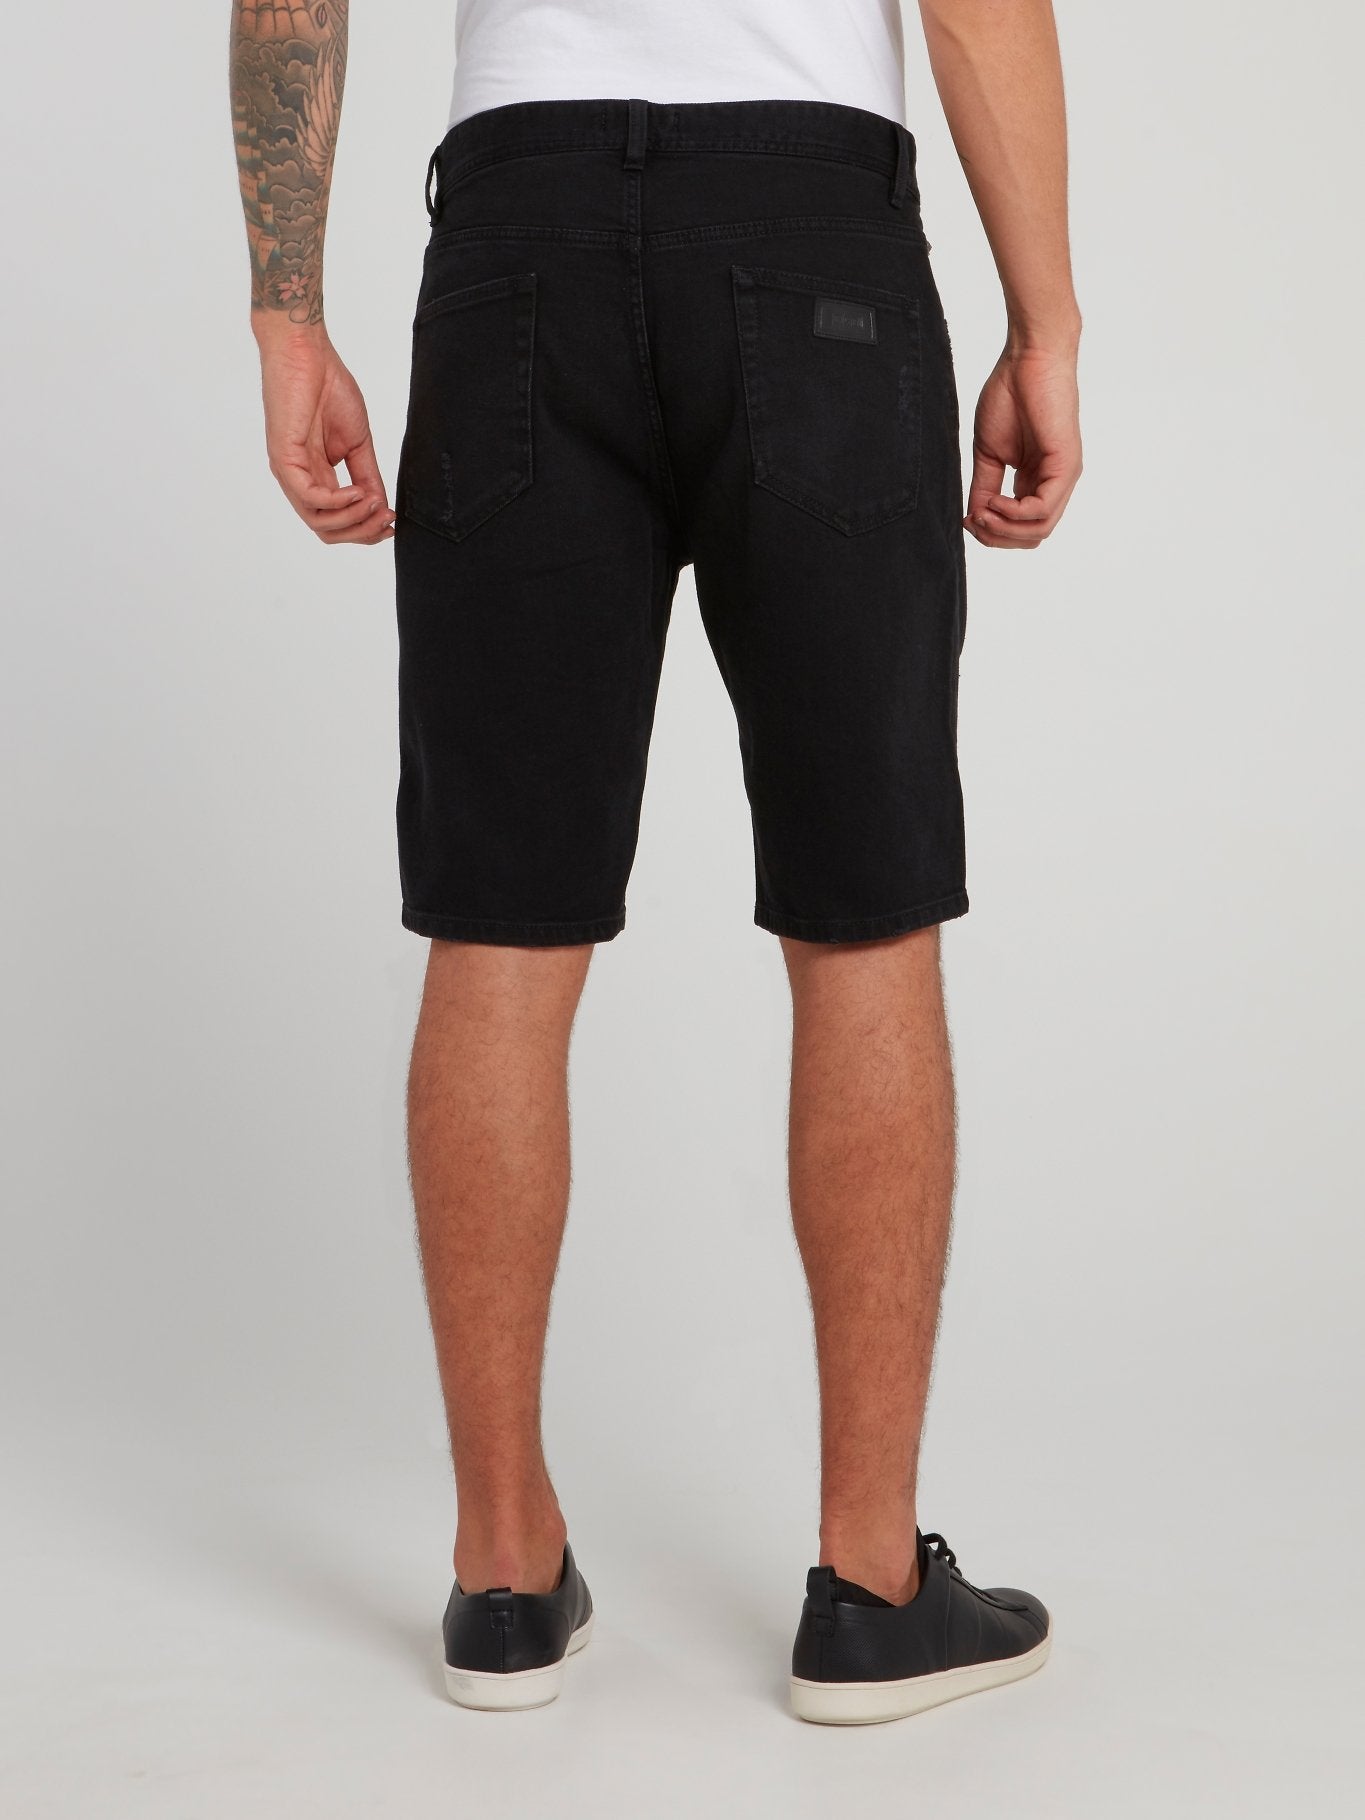 Black Zipper Embellished Shorts